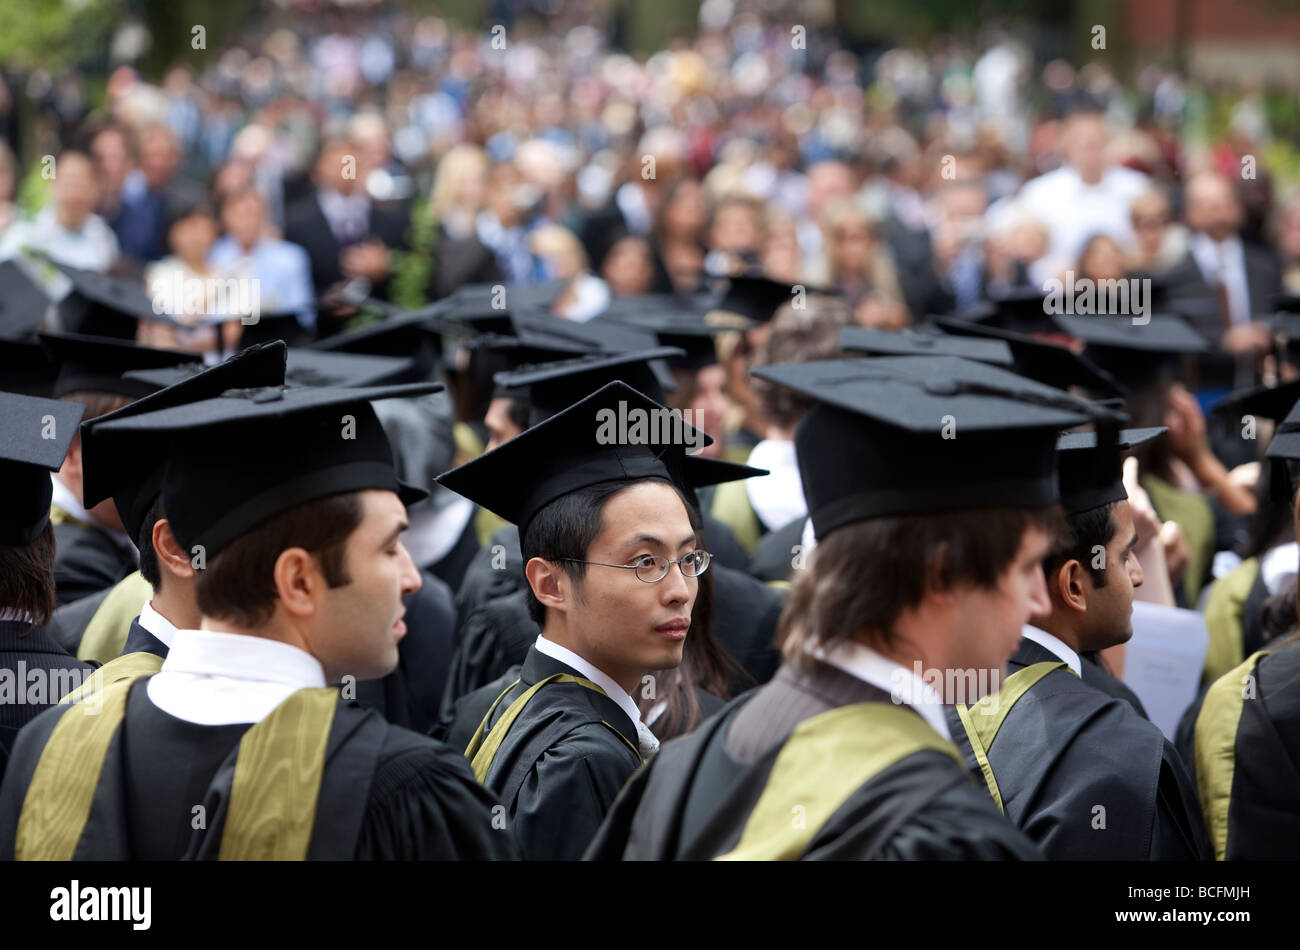 Students at graduation ceremonies at University of Birmingham, England ...